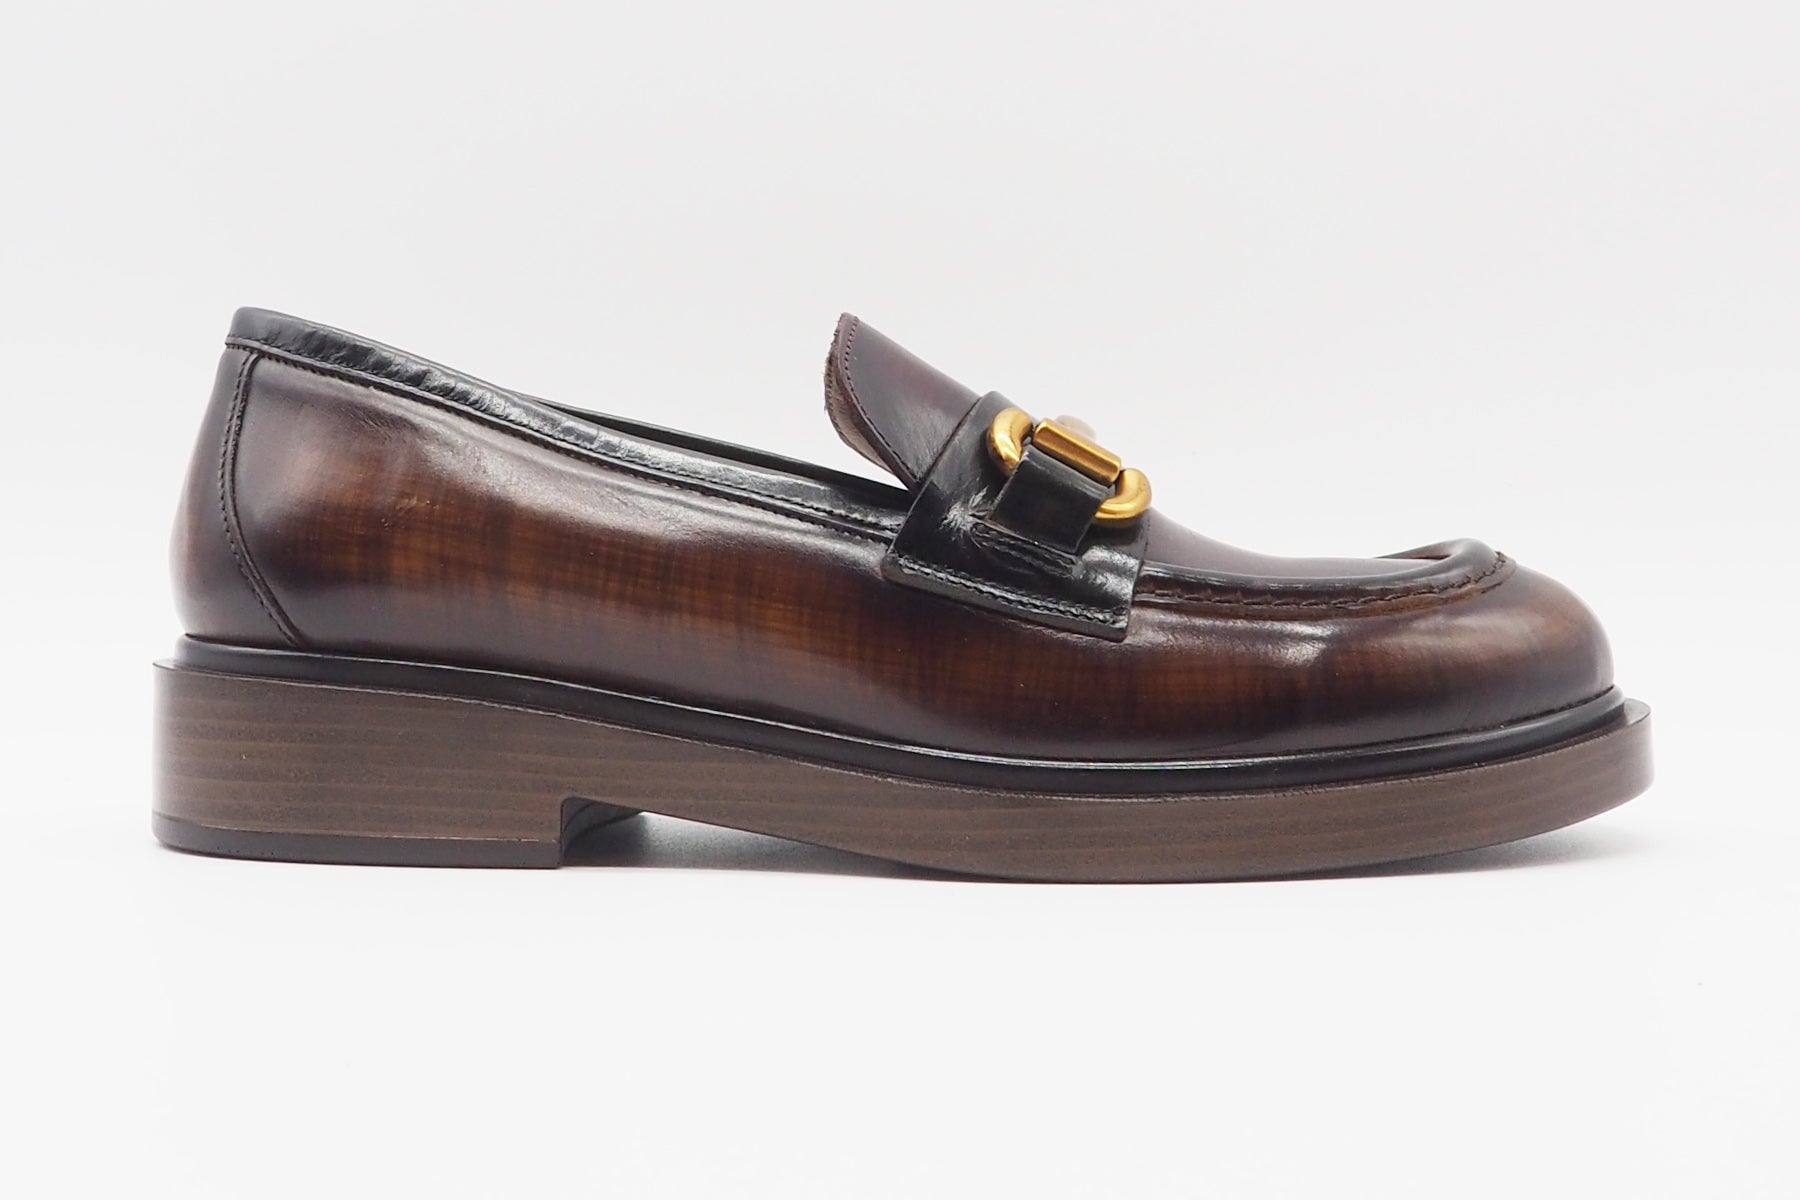 Damen Loafer aus Leder in Braun - Holzoptik - Absatz 2cm Damen Loafers & Schnürer Pons Quintana 